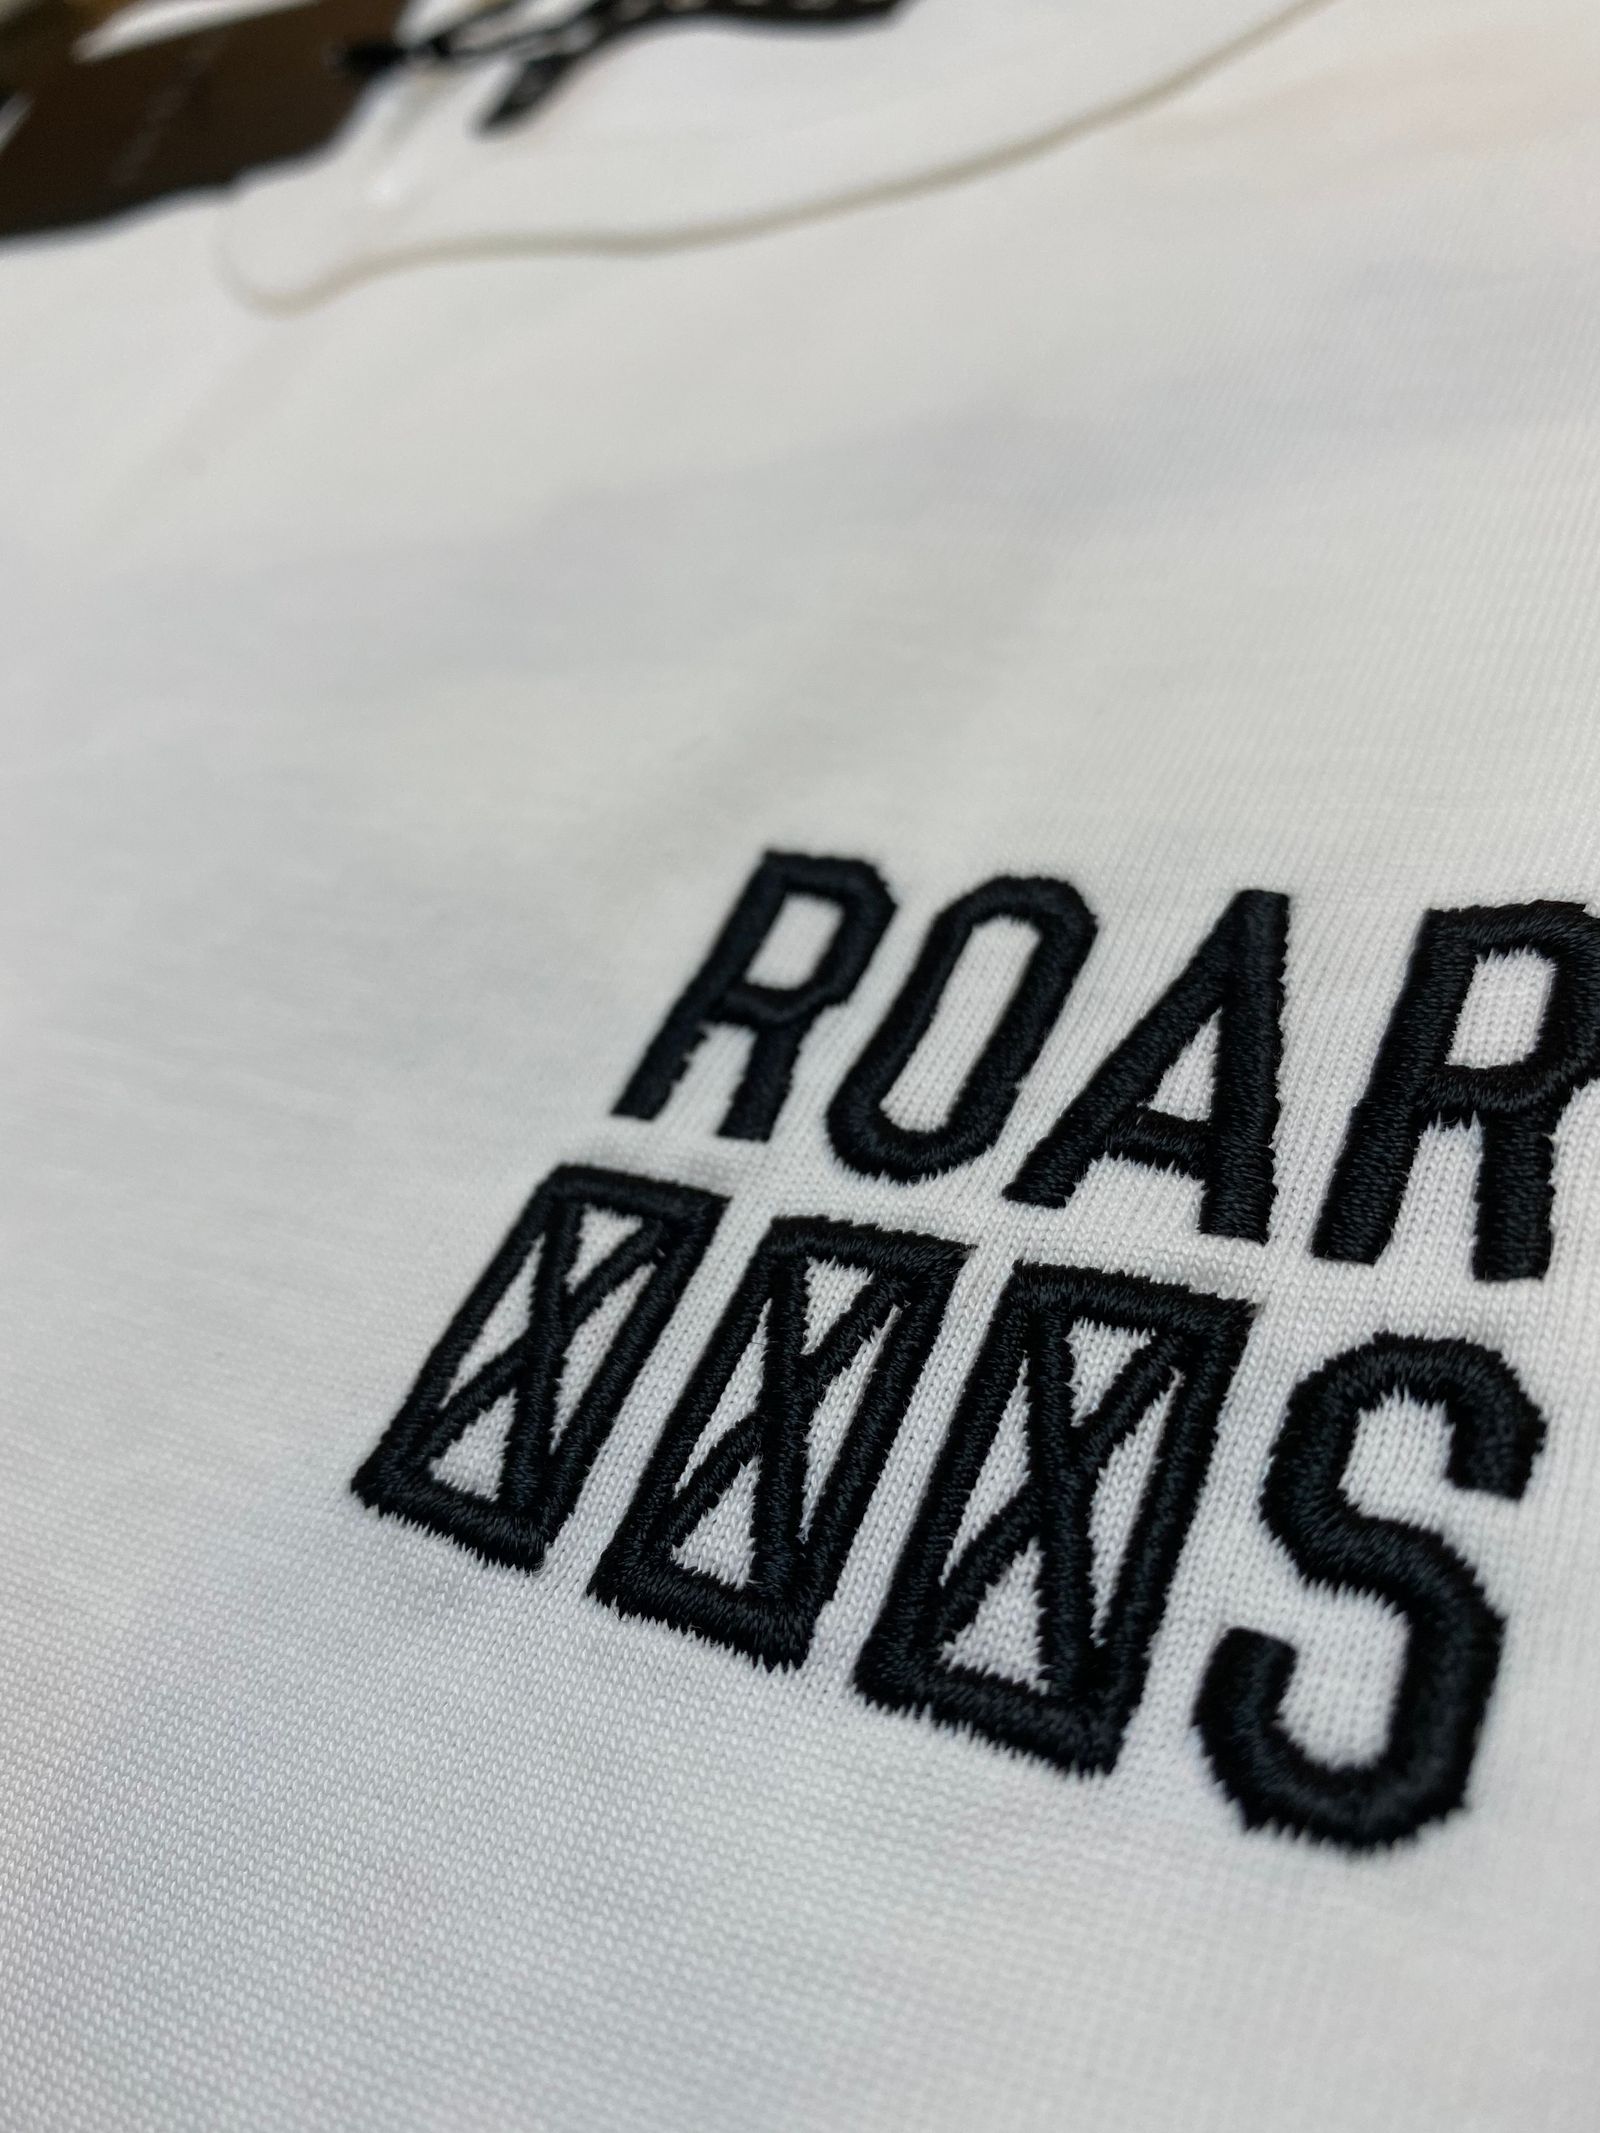 roarguns - Wネームroarguns x godselection xxx 23SS Tシャツ / WHITE ...